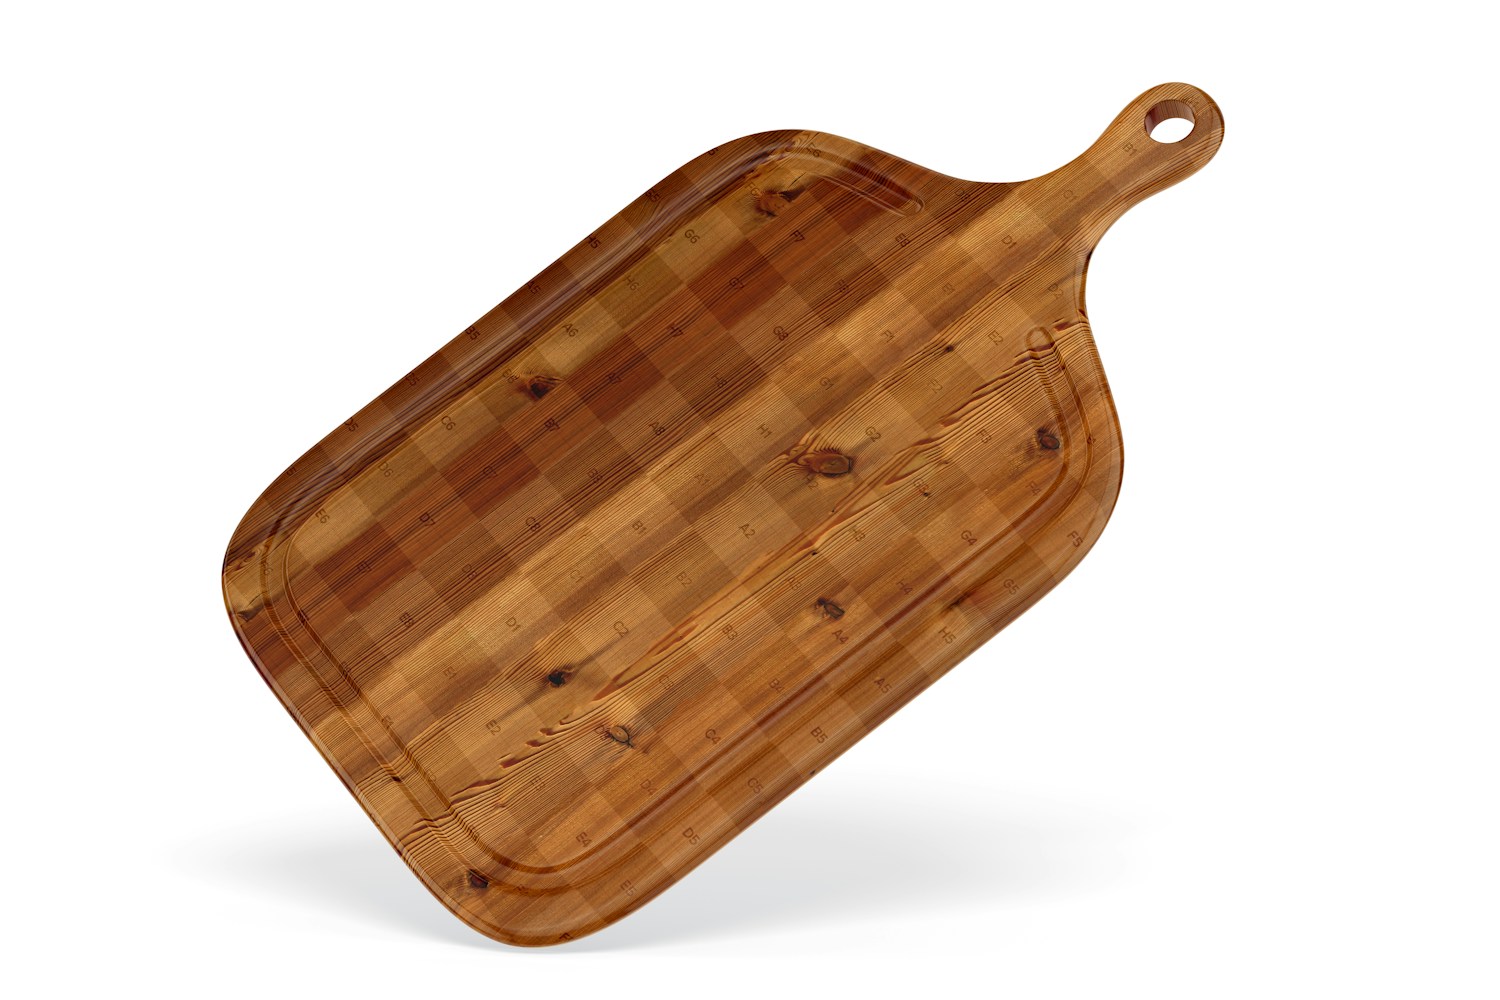 Wood Cutting Board with Handle Mockup